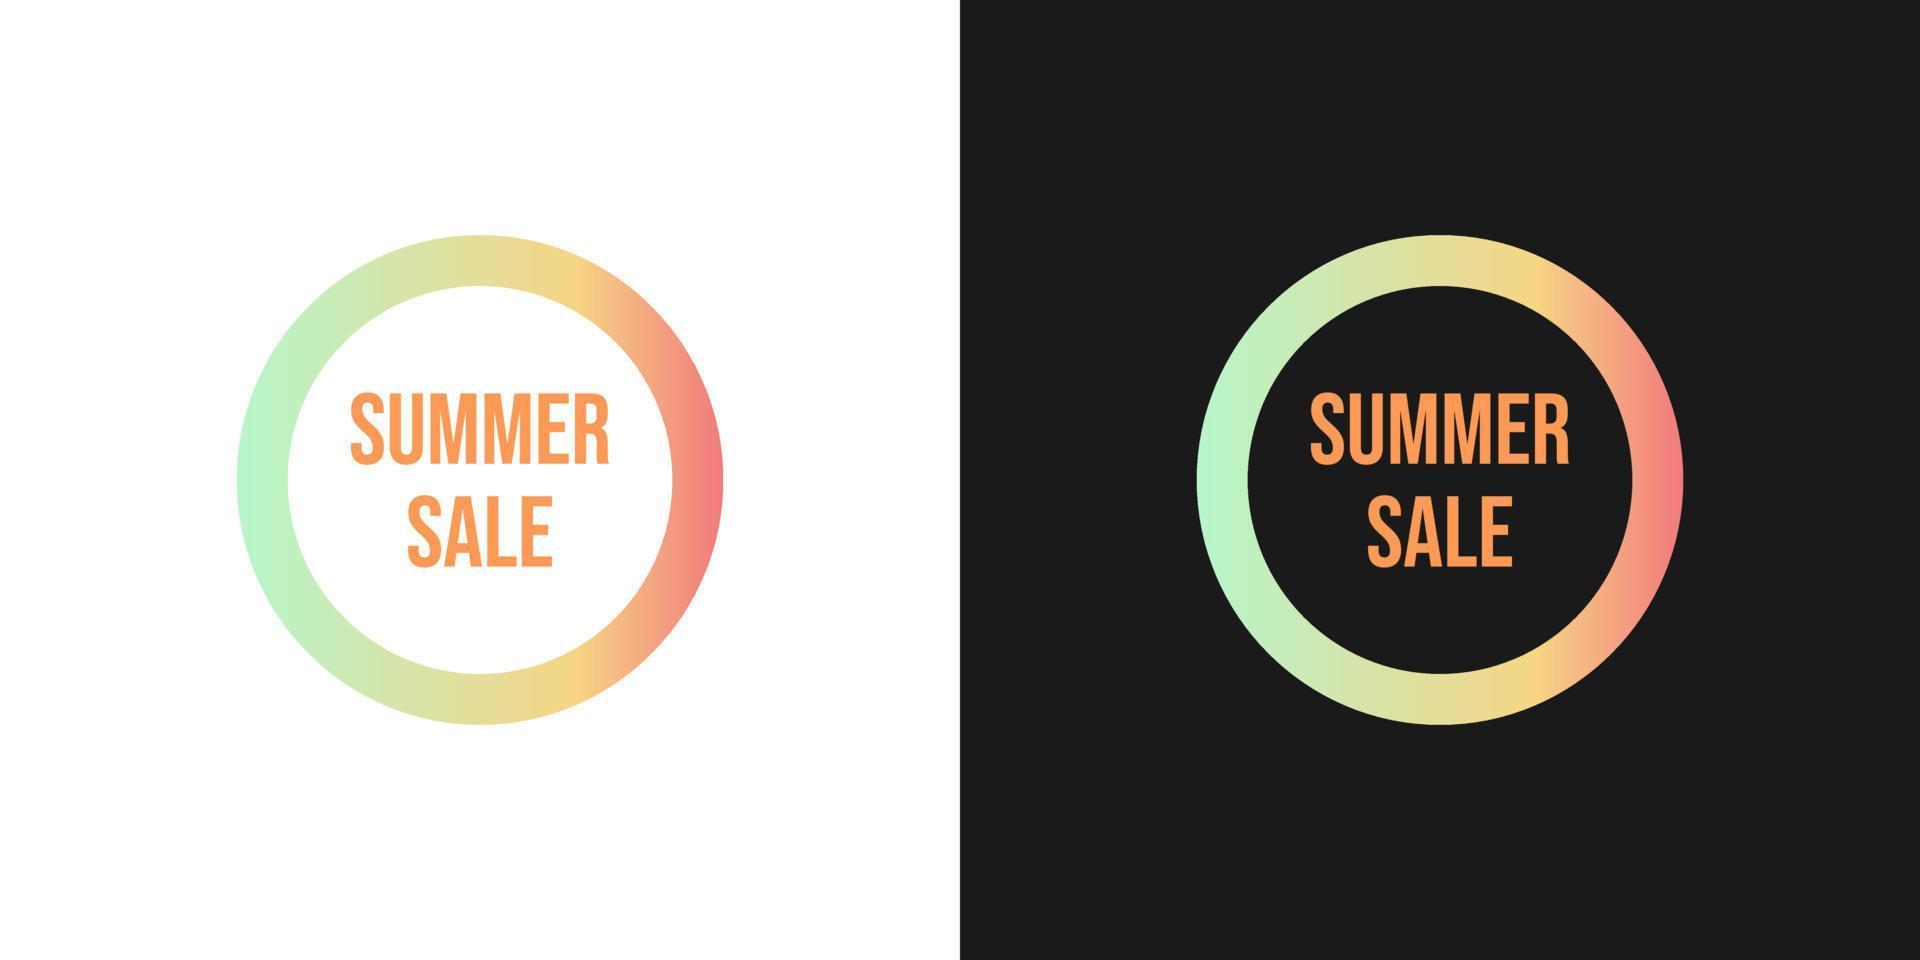 Sommerschlussverkauf. Social-Media-Designvorlage für den Sommerschlussverkauf. Sommerschlussverkauf Rabatt 50 Prozent. vektor